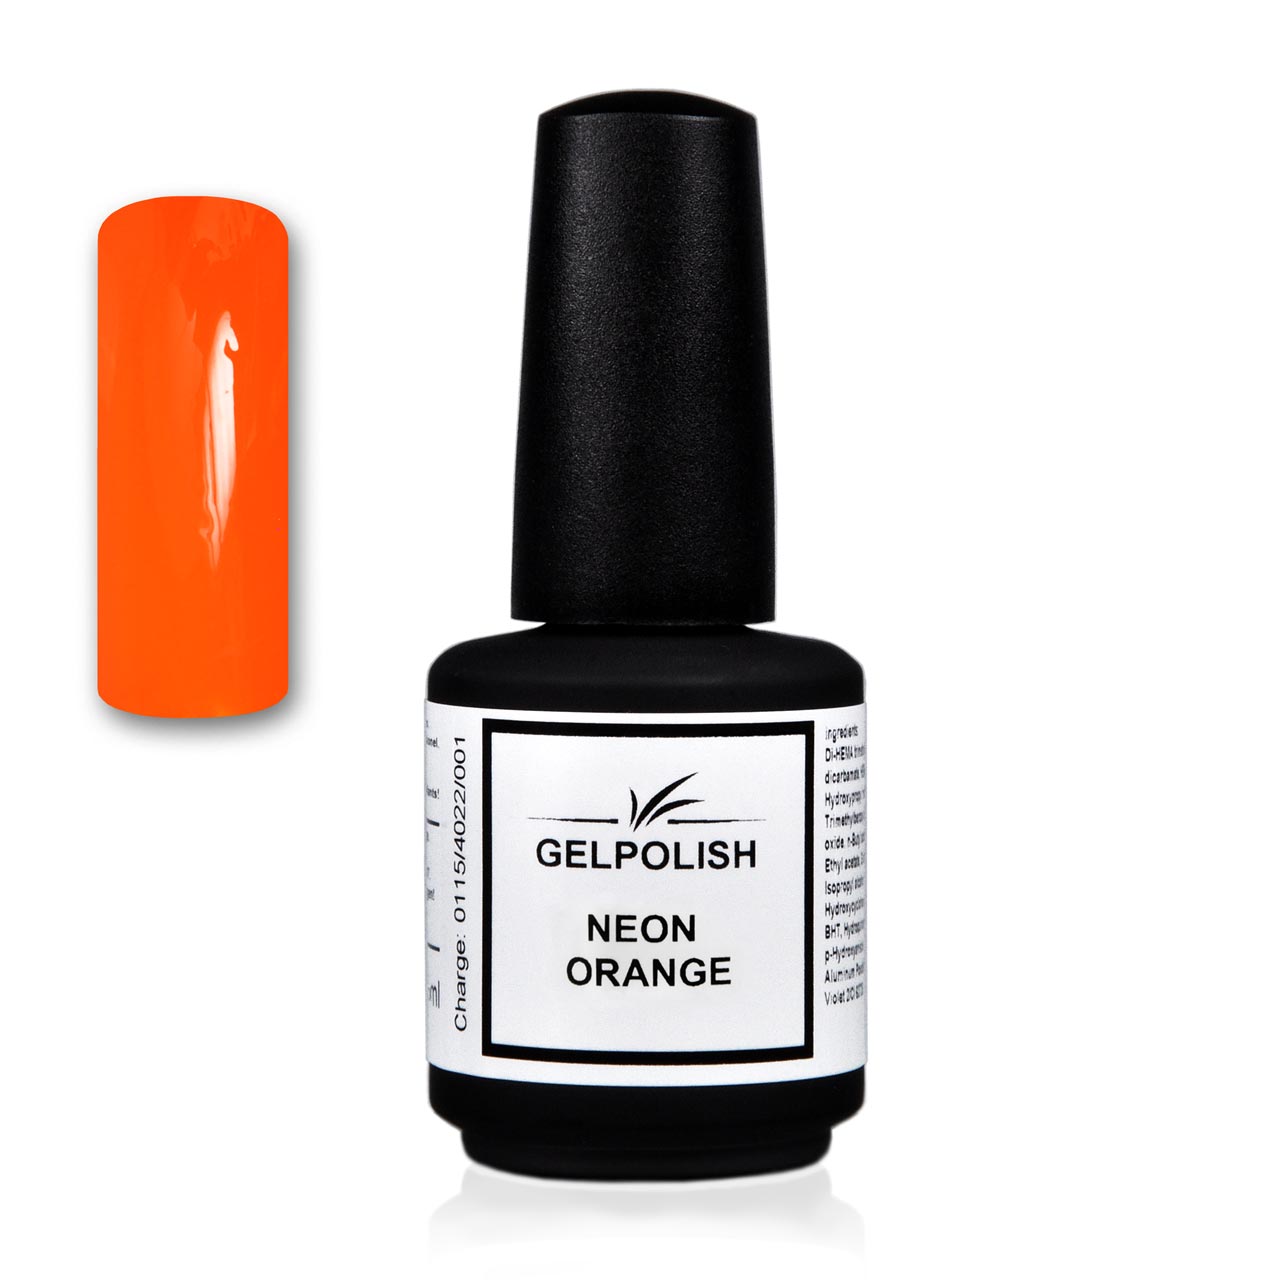 Gelpolish Neon Orange